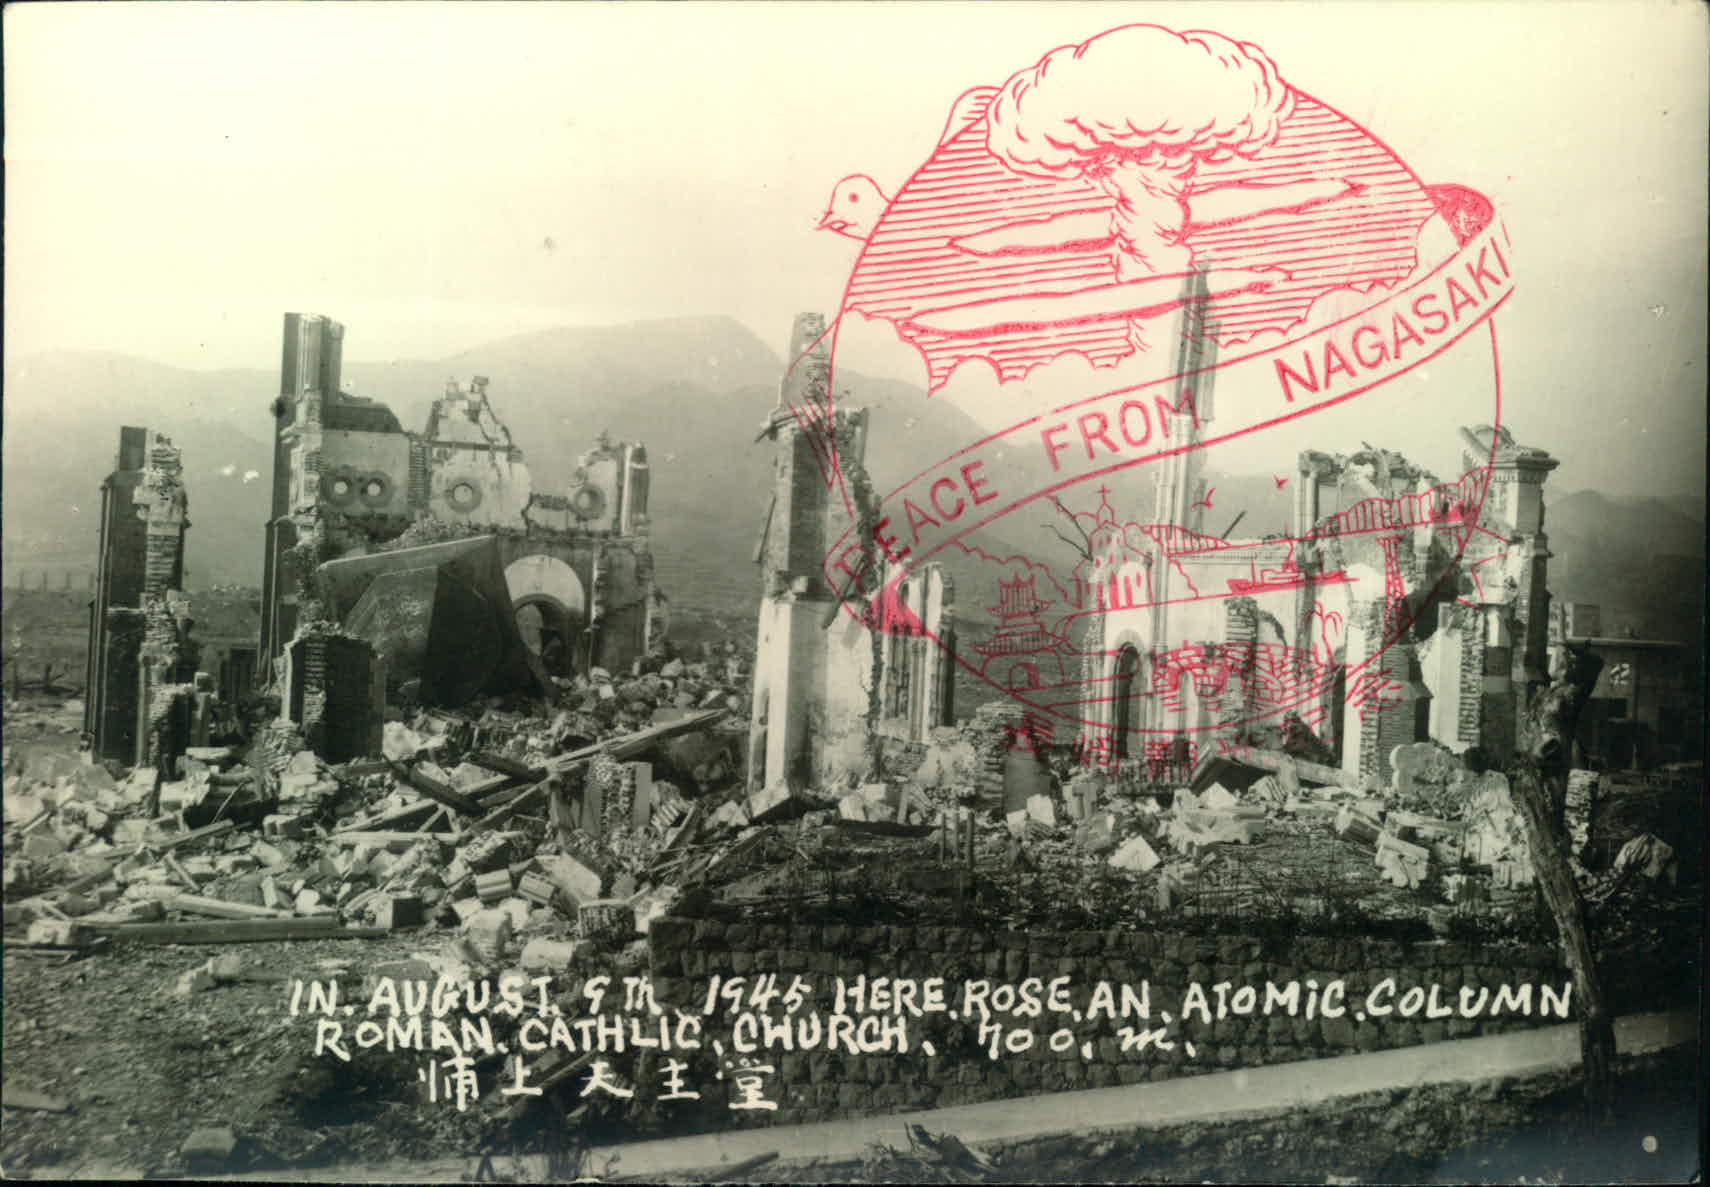 Fat Man over Nagasaki on 9 August, 1945 - Nuclear Destruction